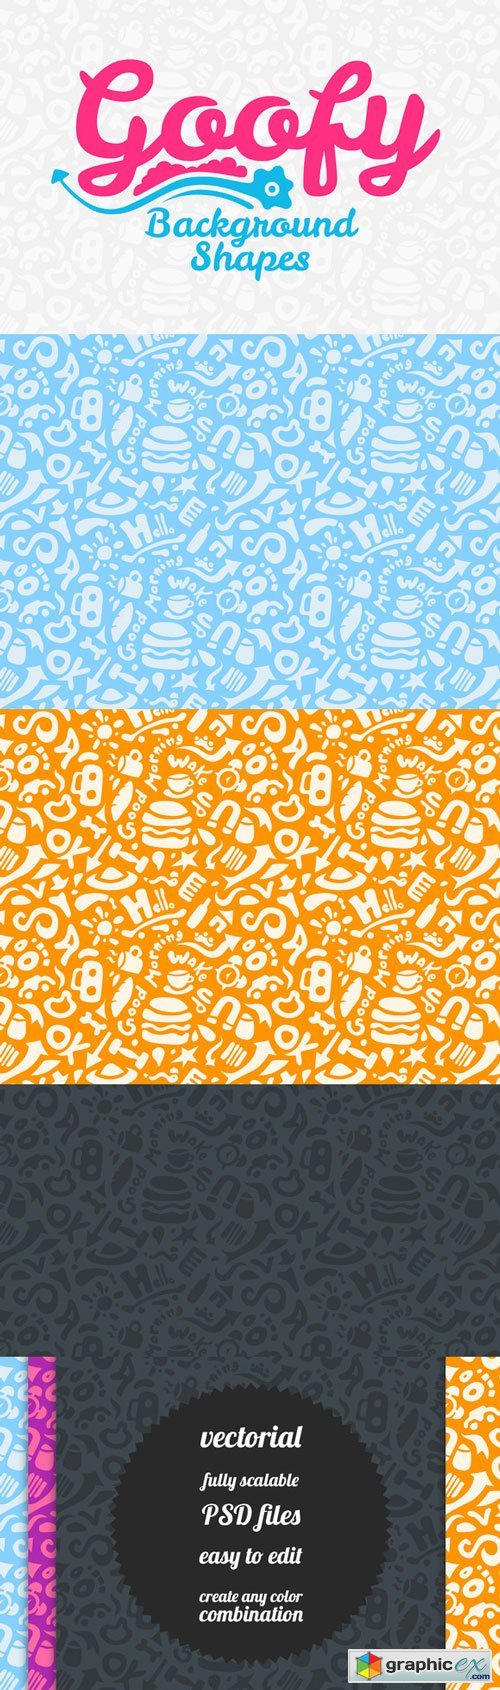 Goofy Background Pattern